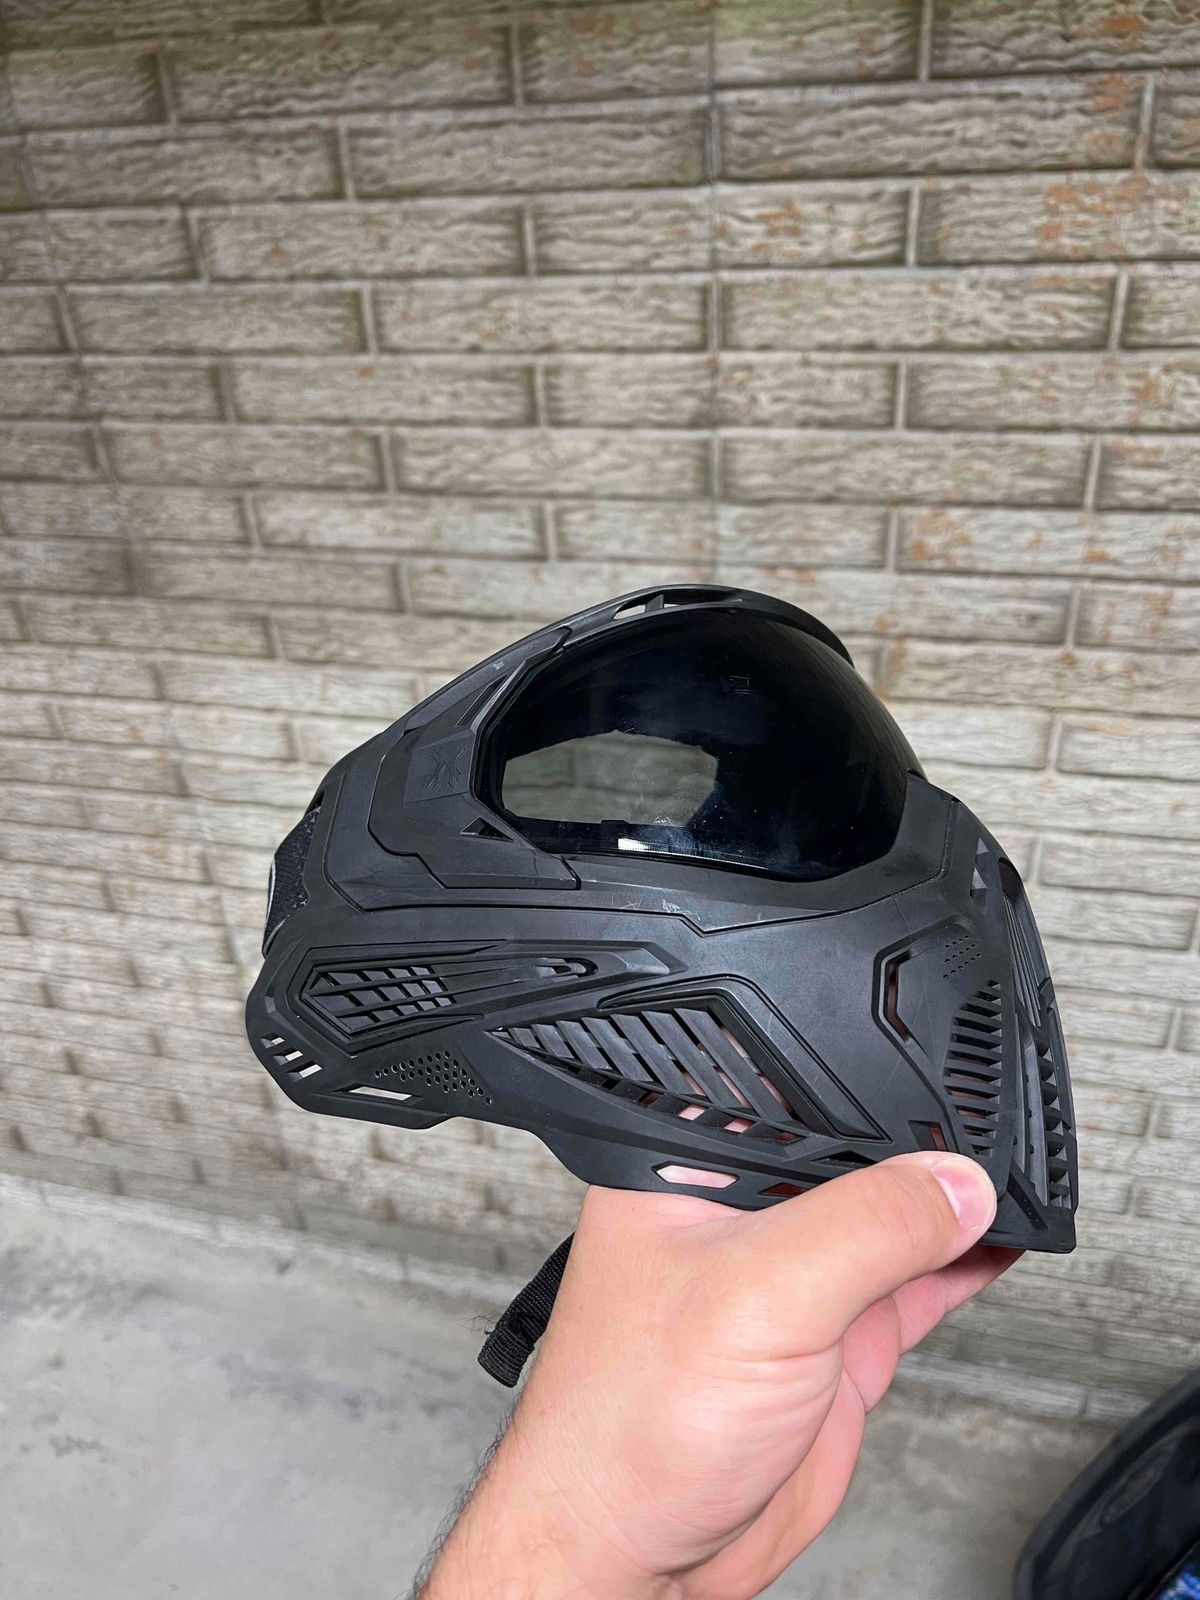 HK Army SLR mask